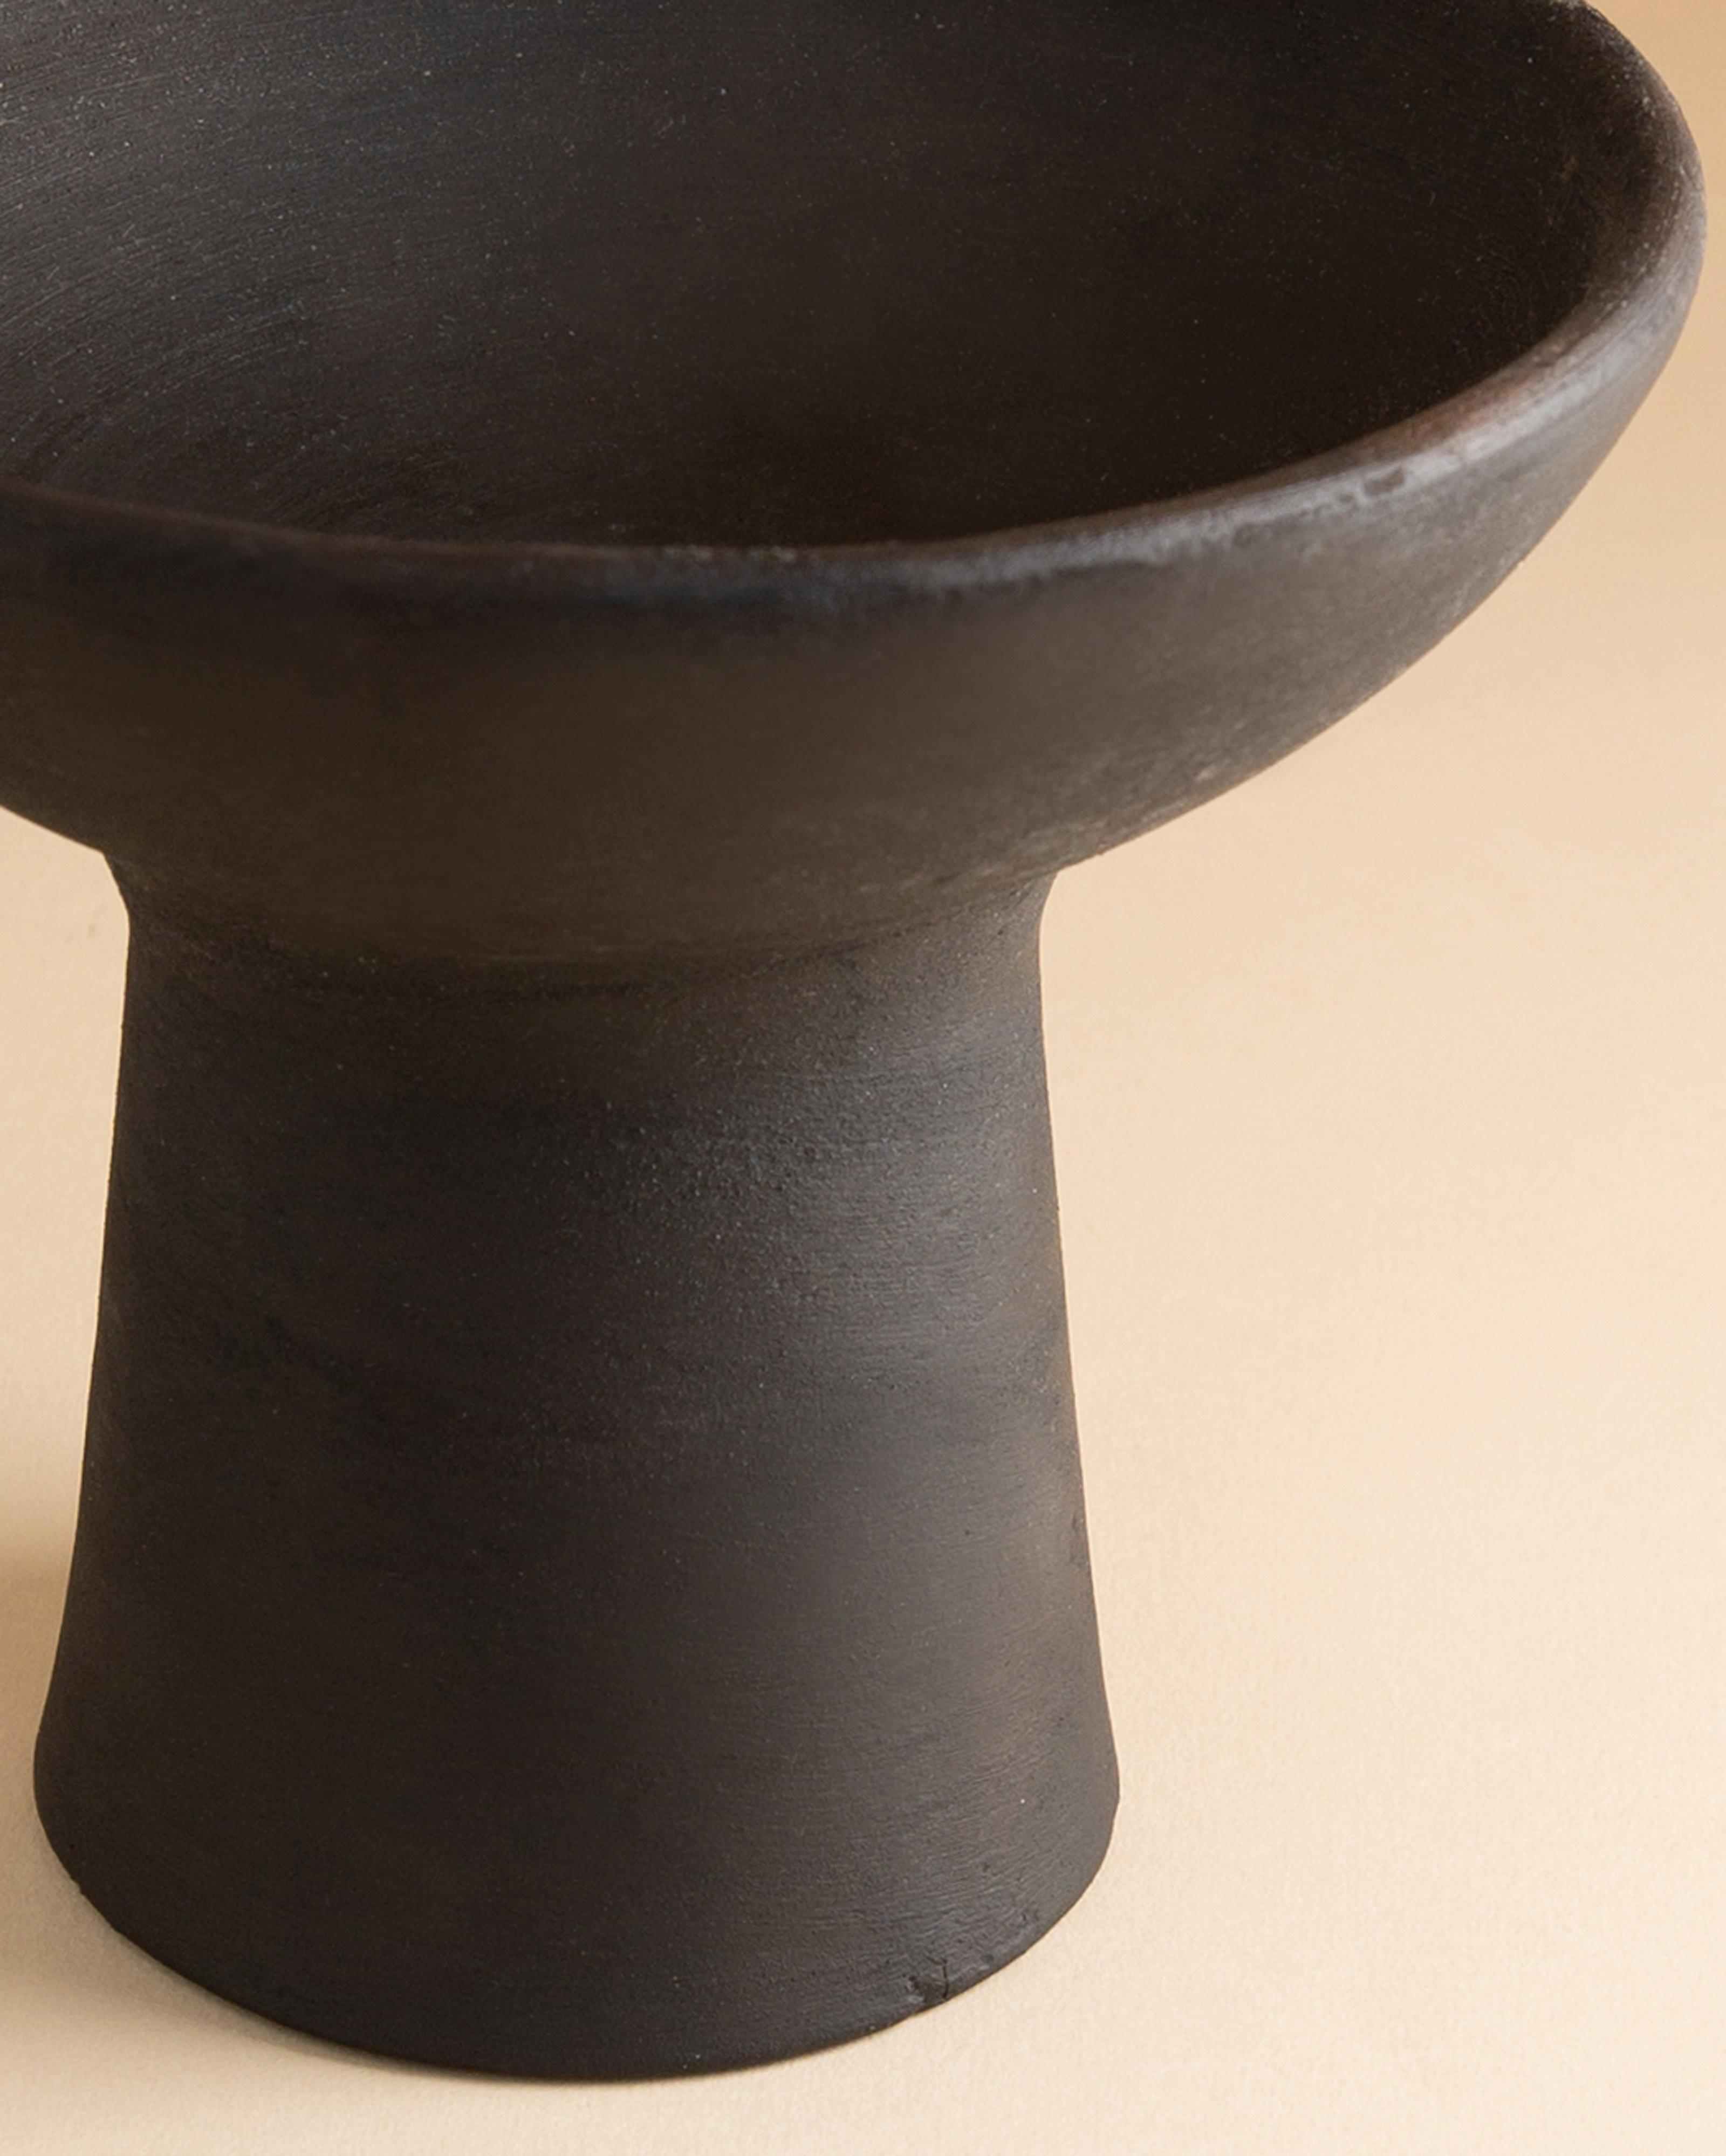 Burnt Ceramic Footed Bowl -  Black